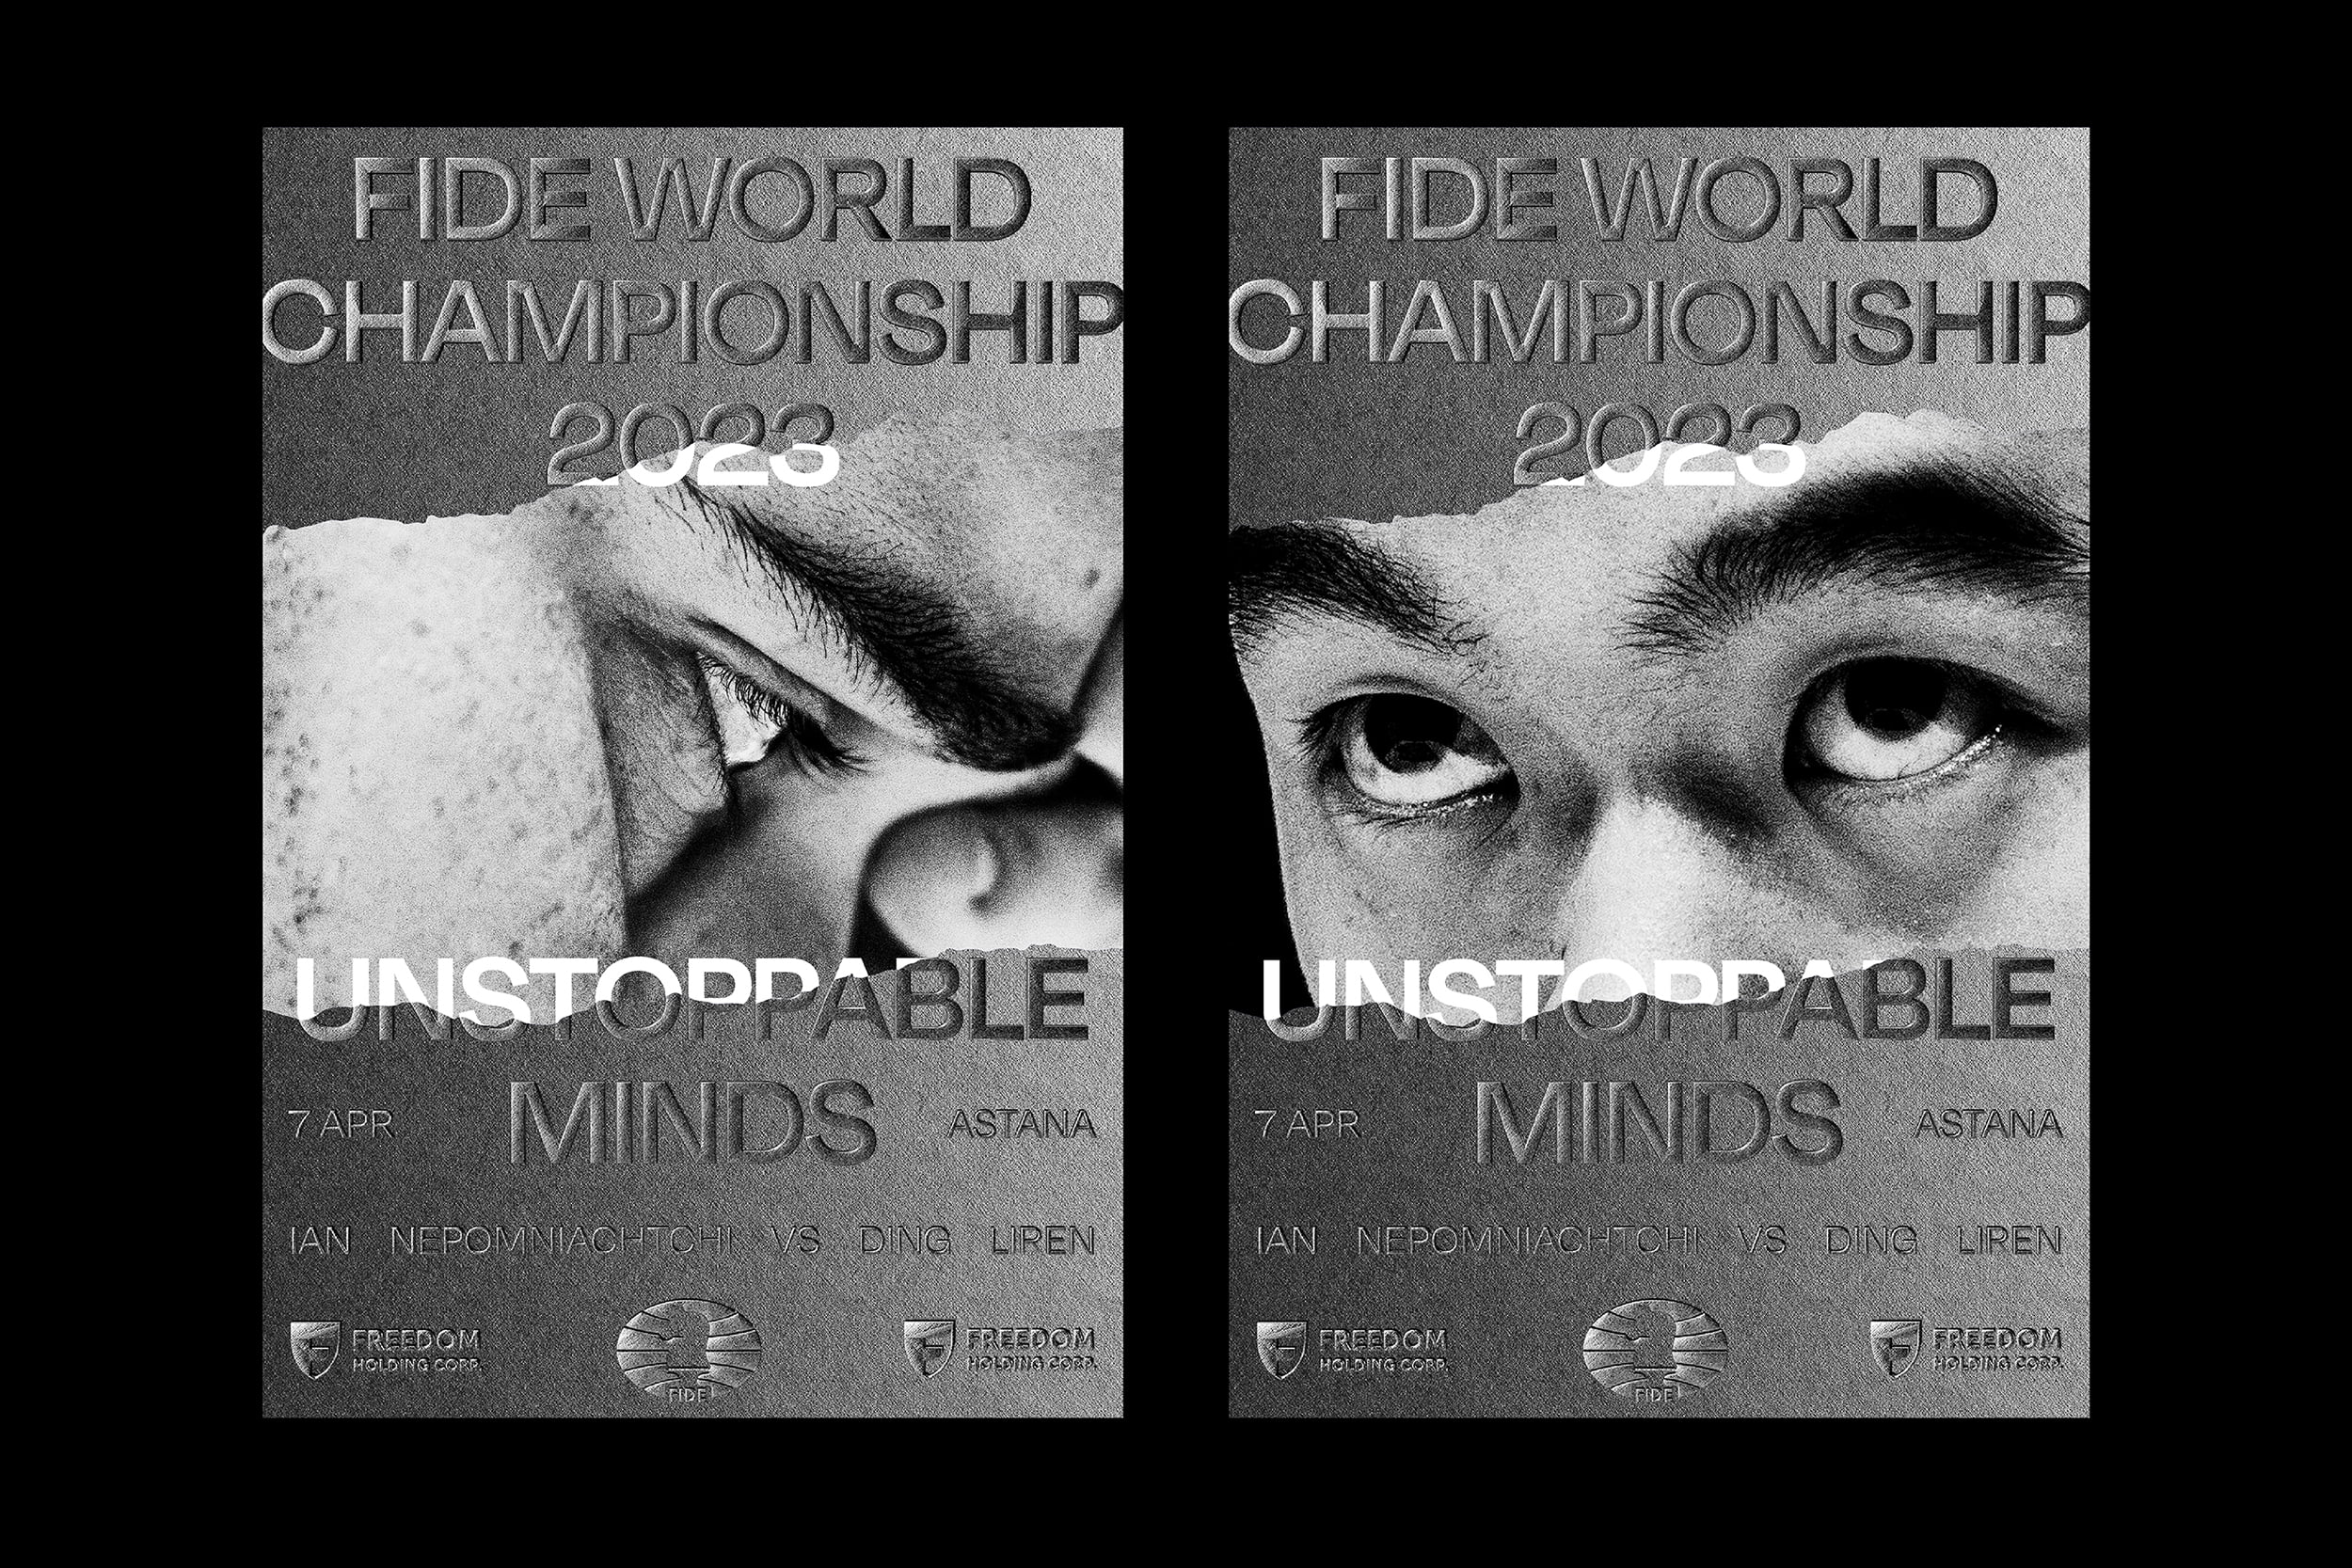 Fide Championship: Unstoppable Minds